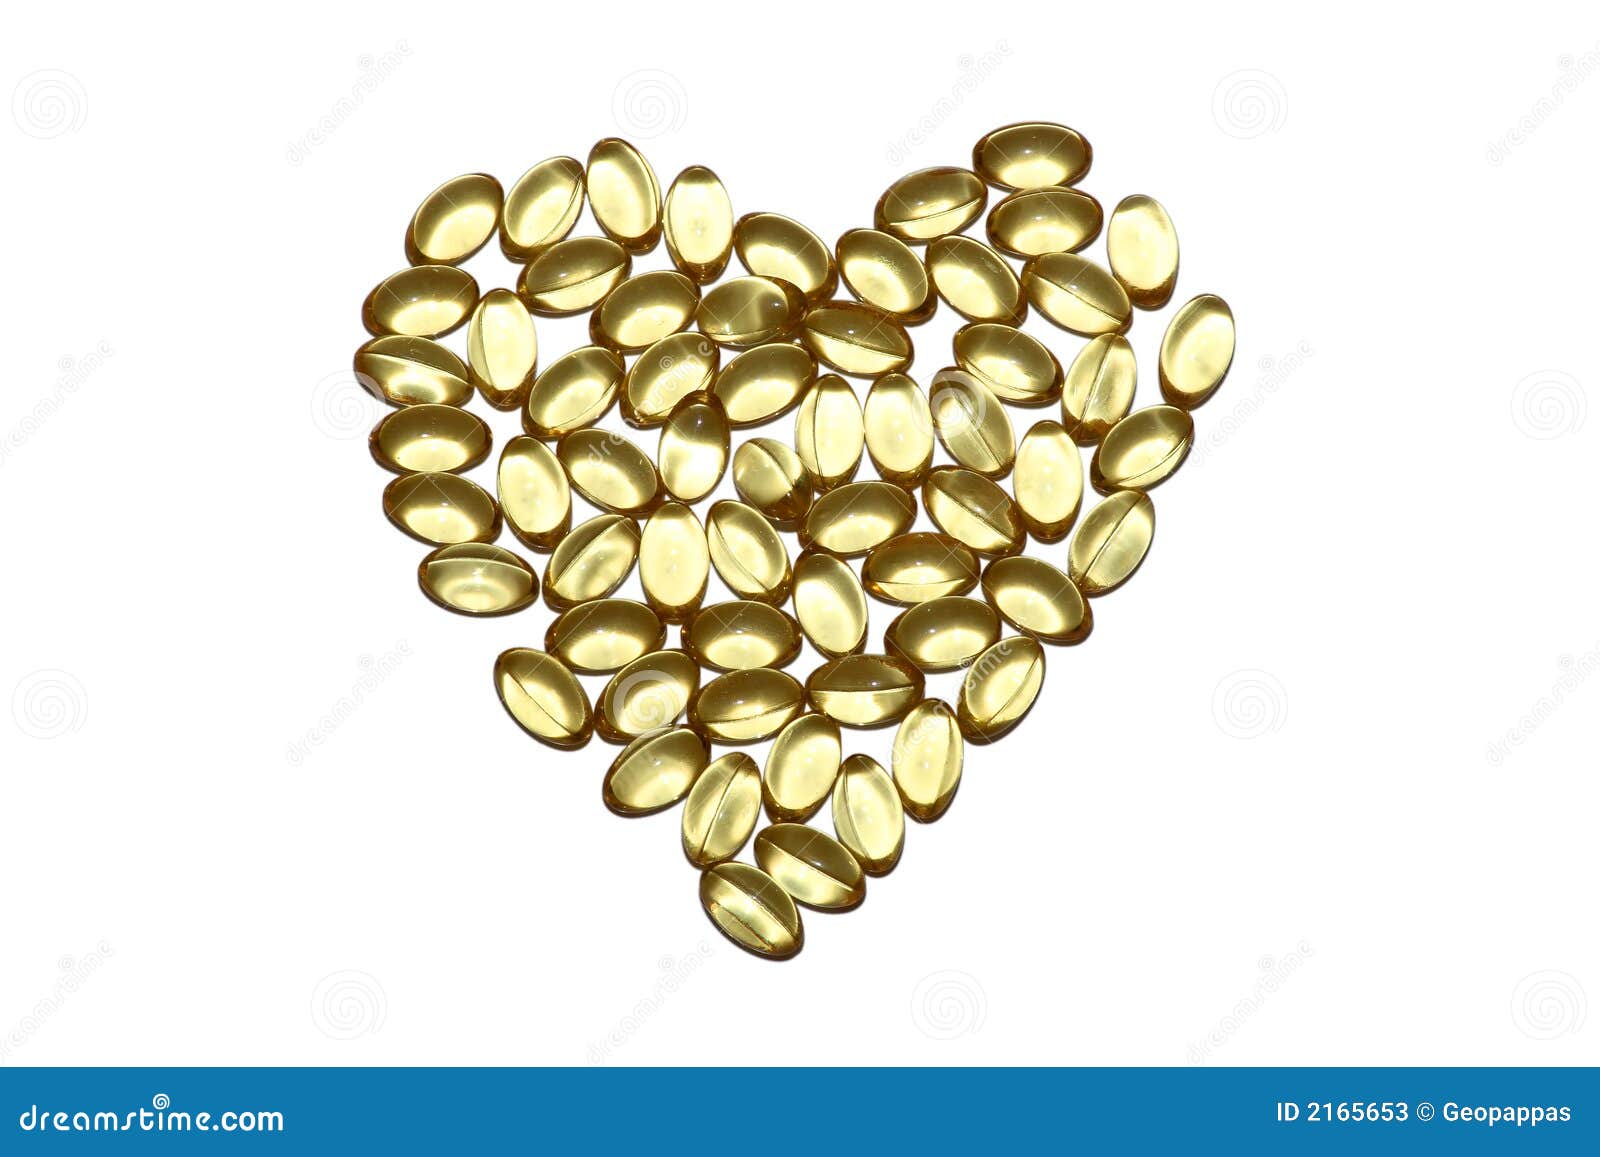 heart-health-healthy-lifestyle-vitamins-